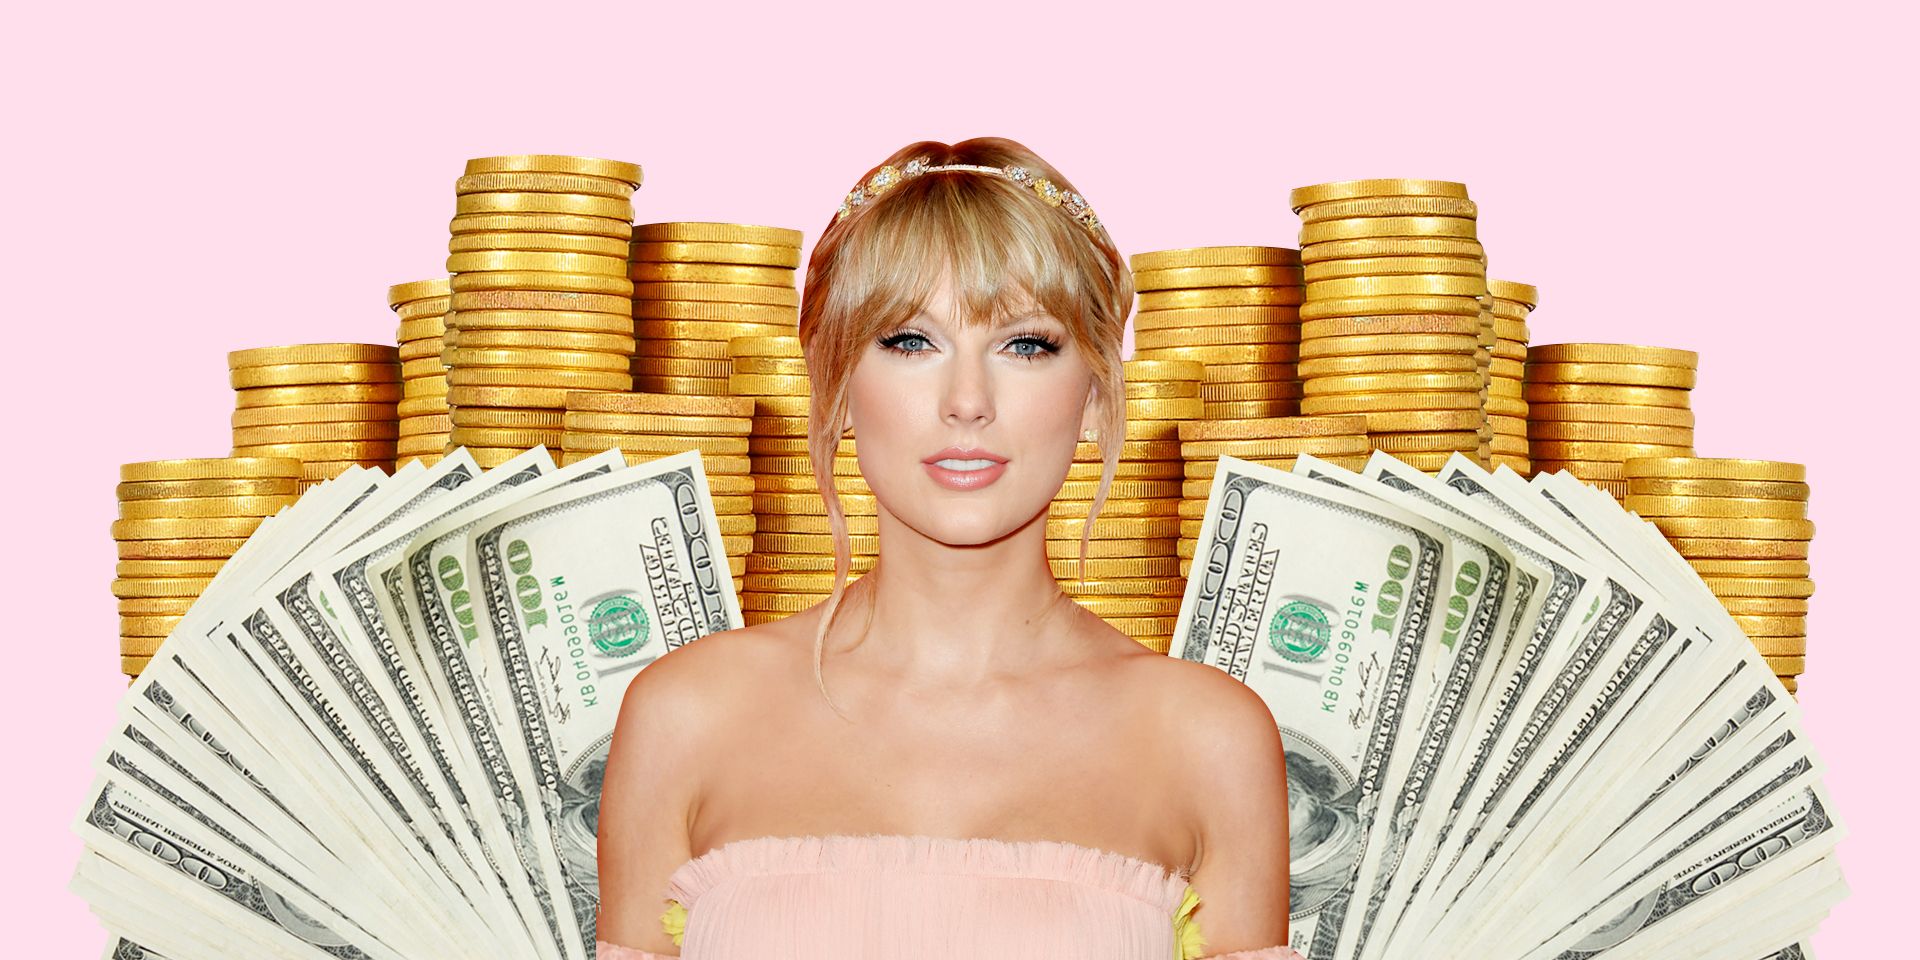 Taylor swift net worth